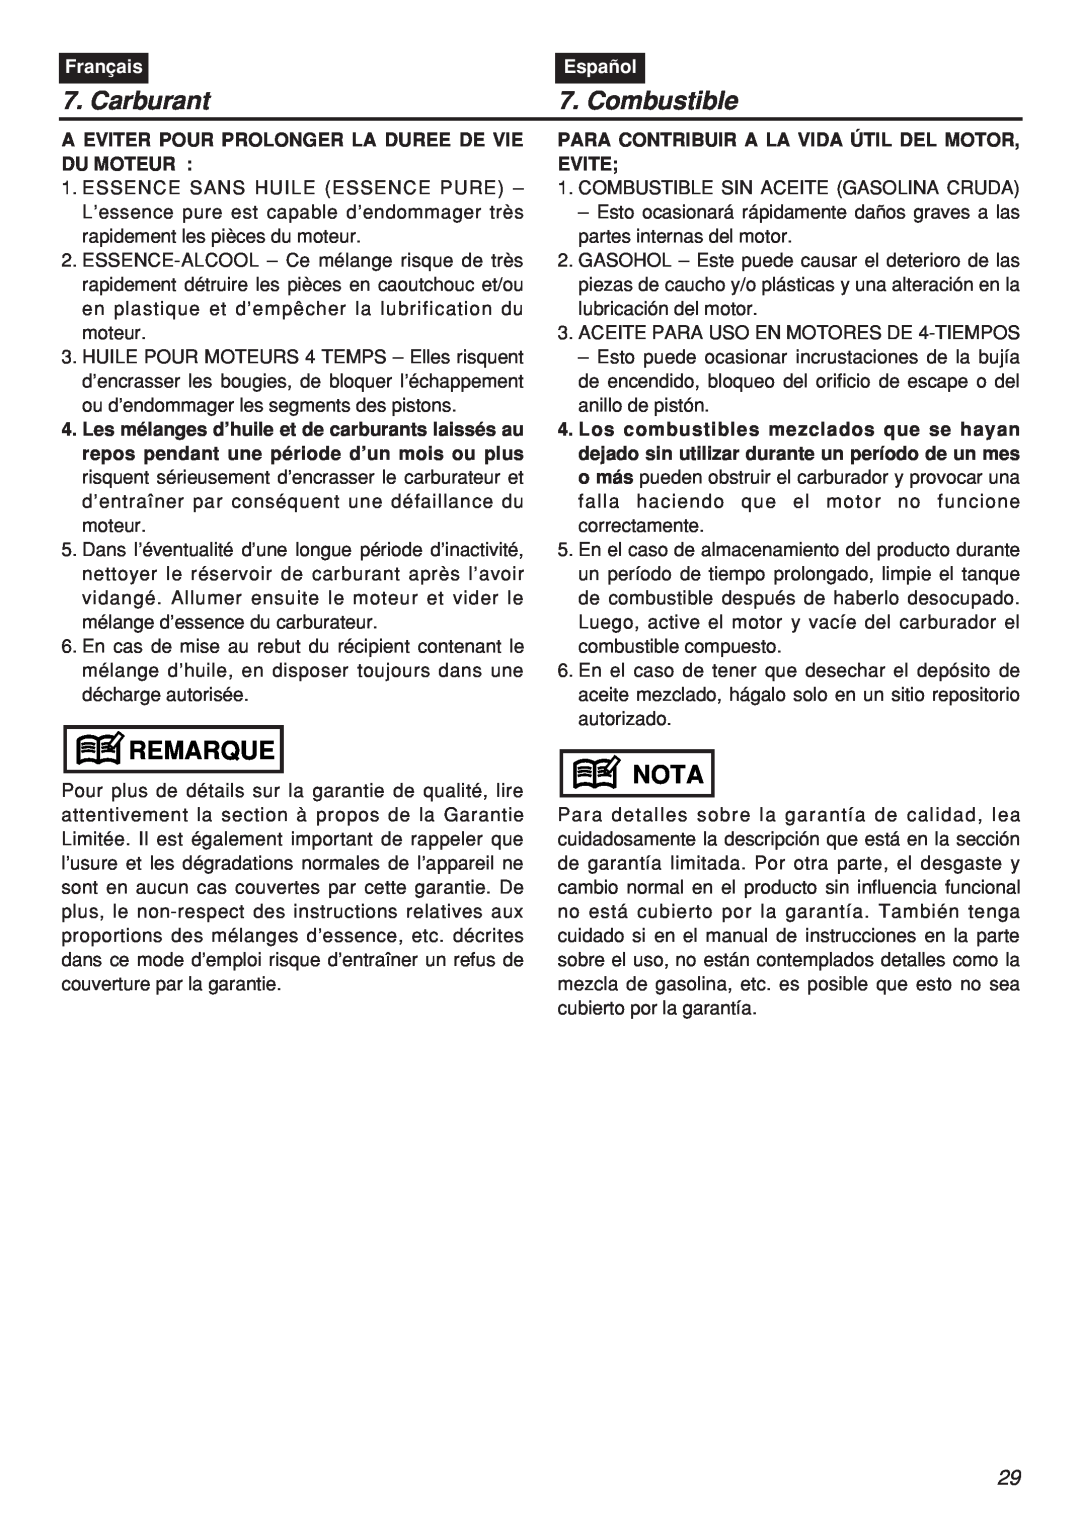 Zenoah EBZ7001RH-CA, EBZ7001-CA manual Carburant, Combustible, Remarque, Nota, Français, Español 